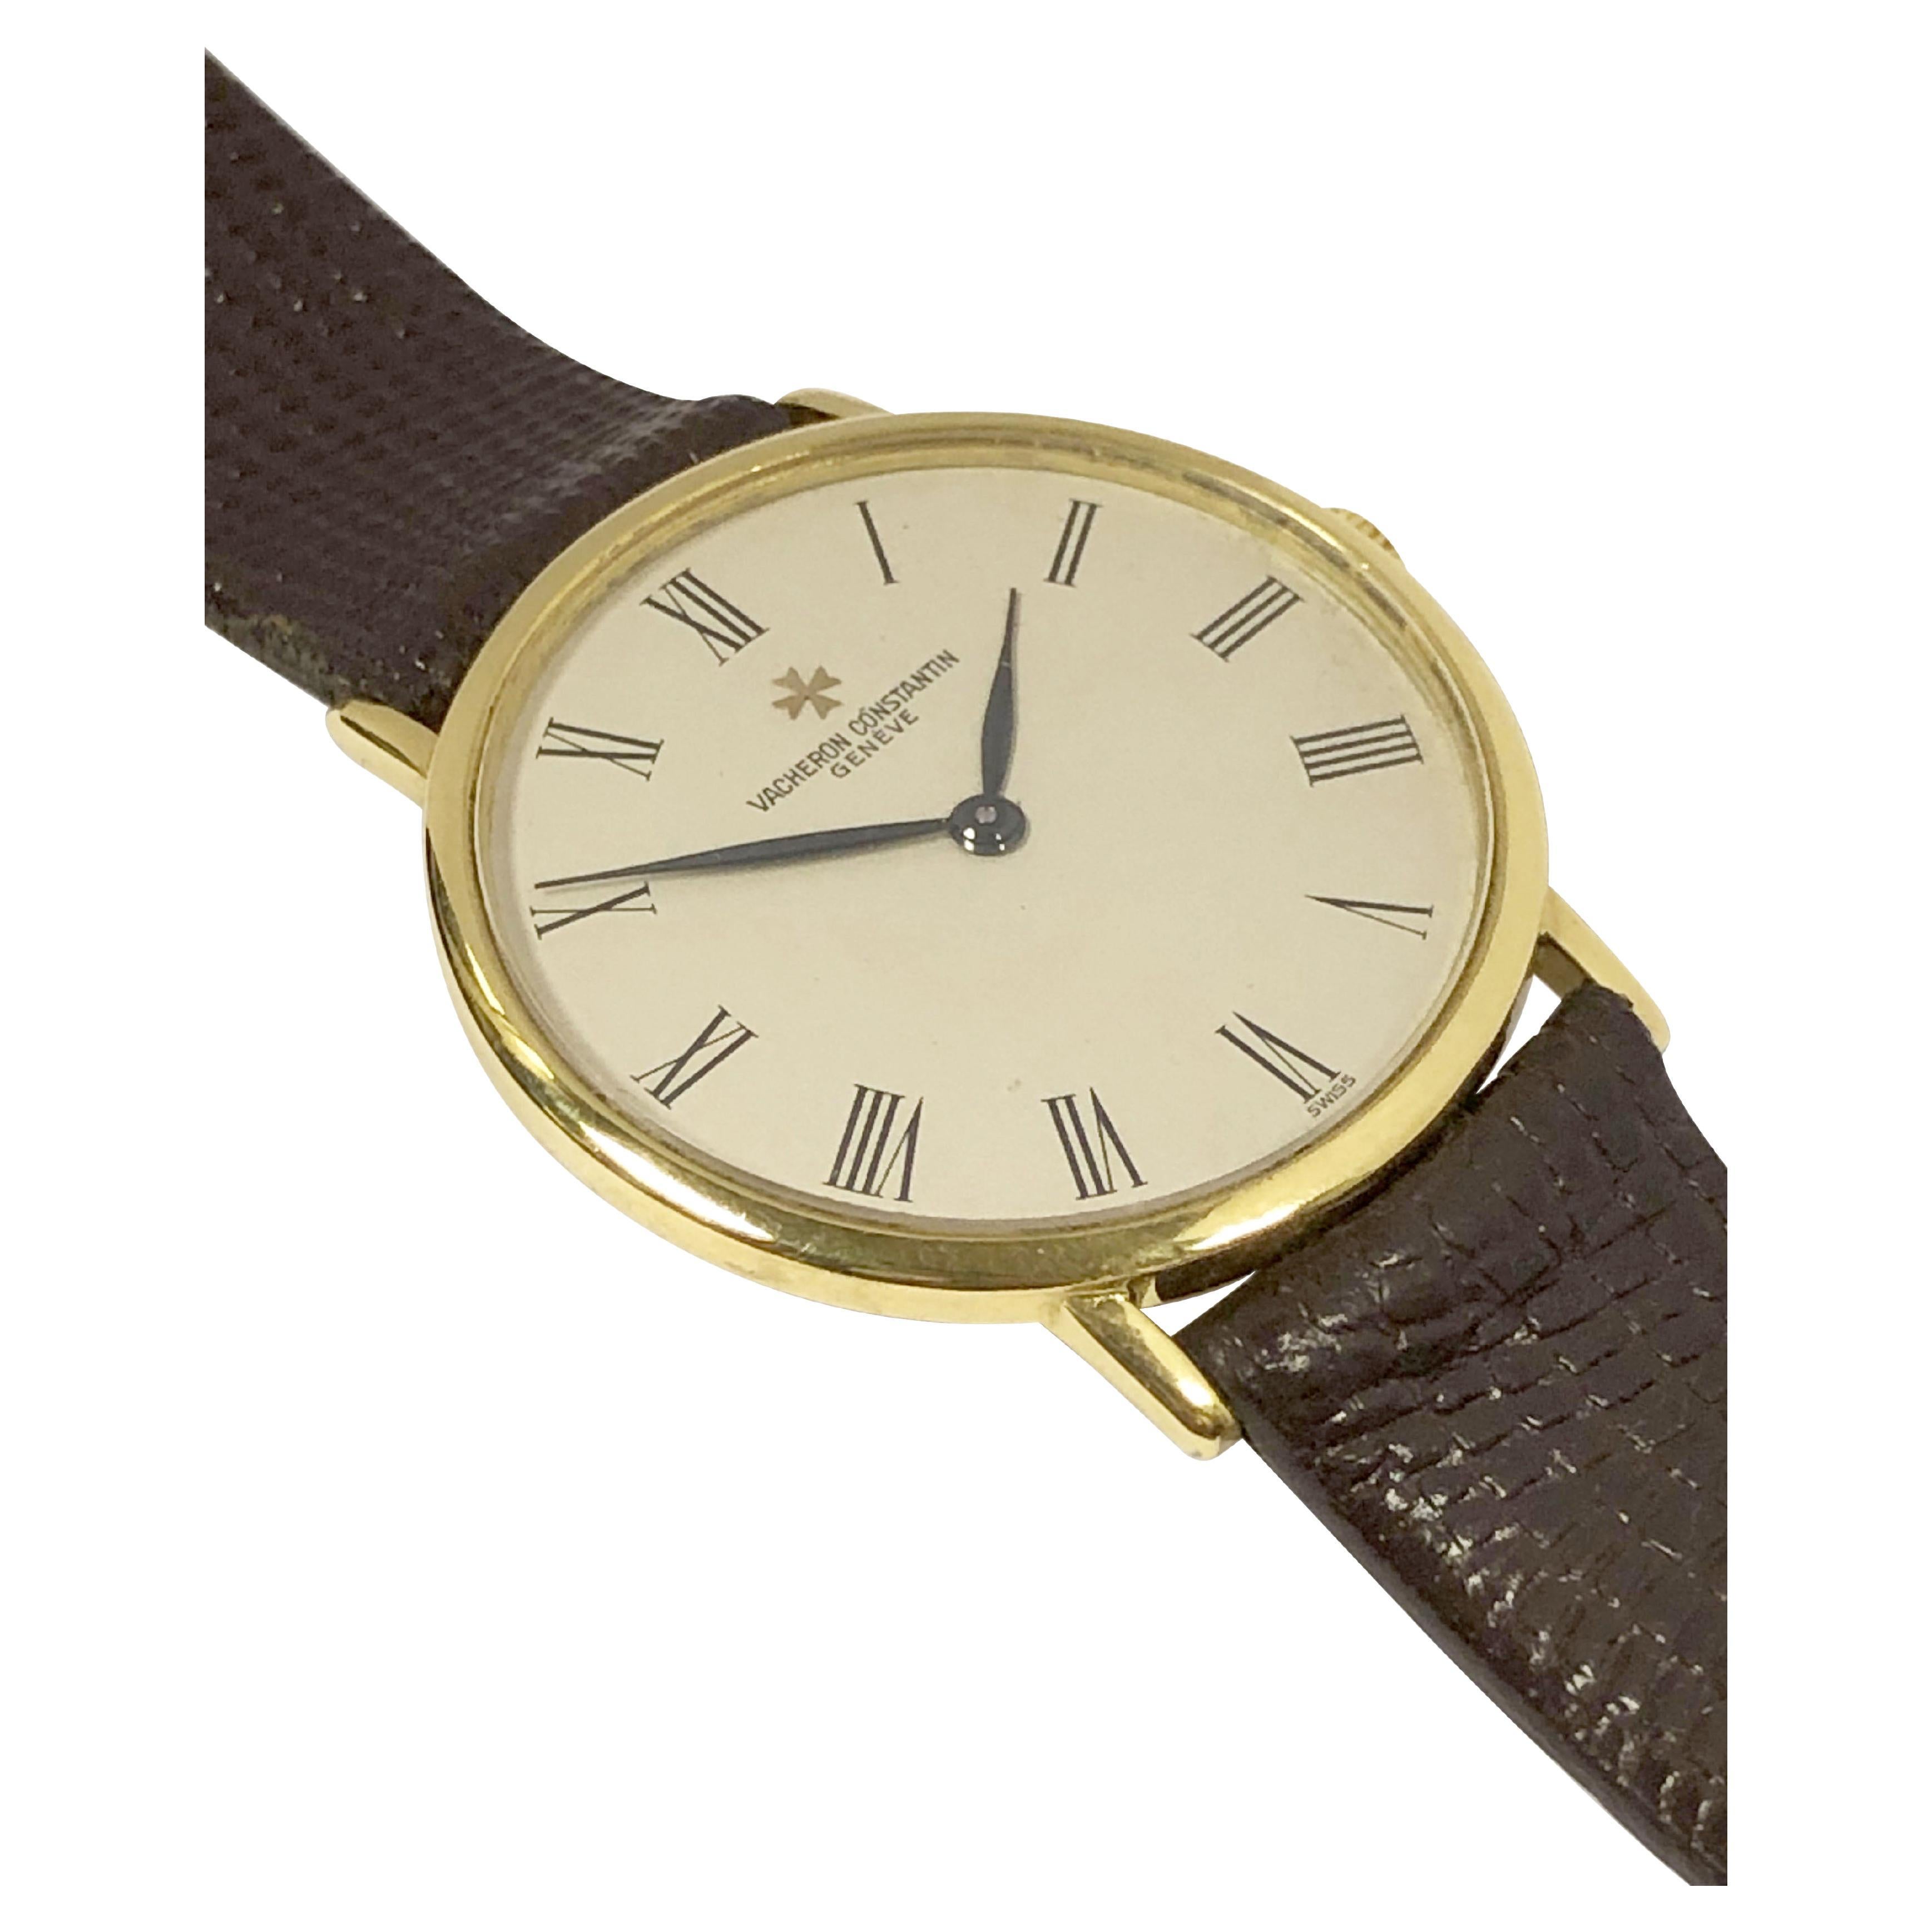 Vacheron Constantin 39019 Classic Yellow Gold Mechanical Wrist Watch